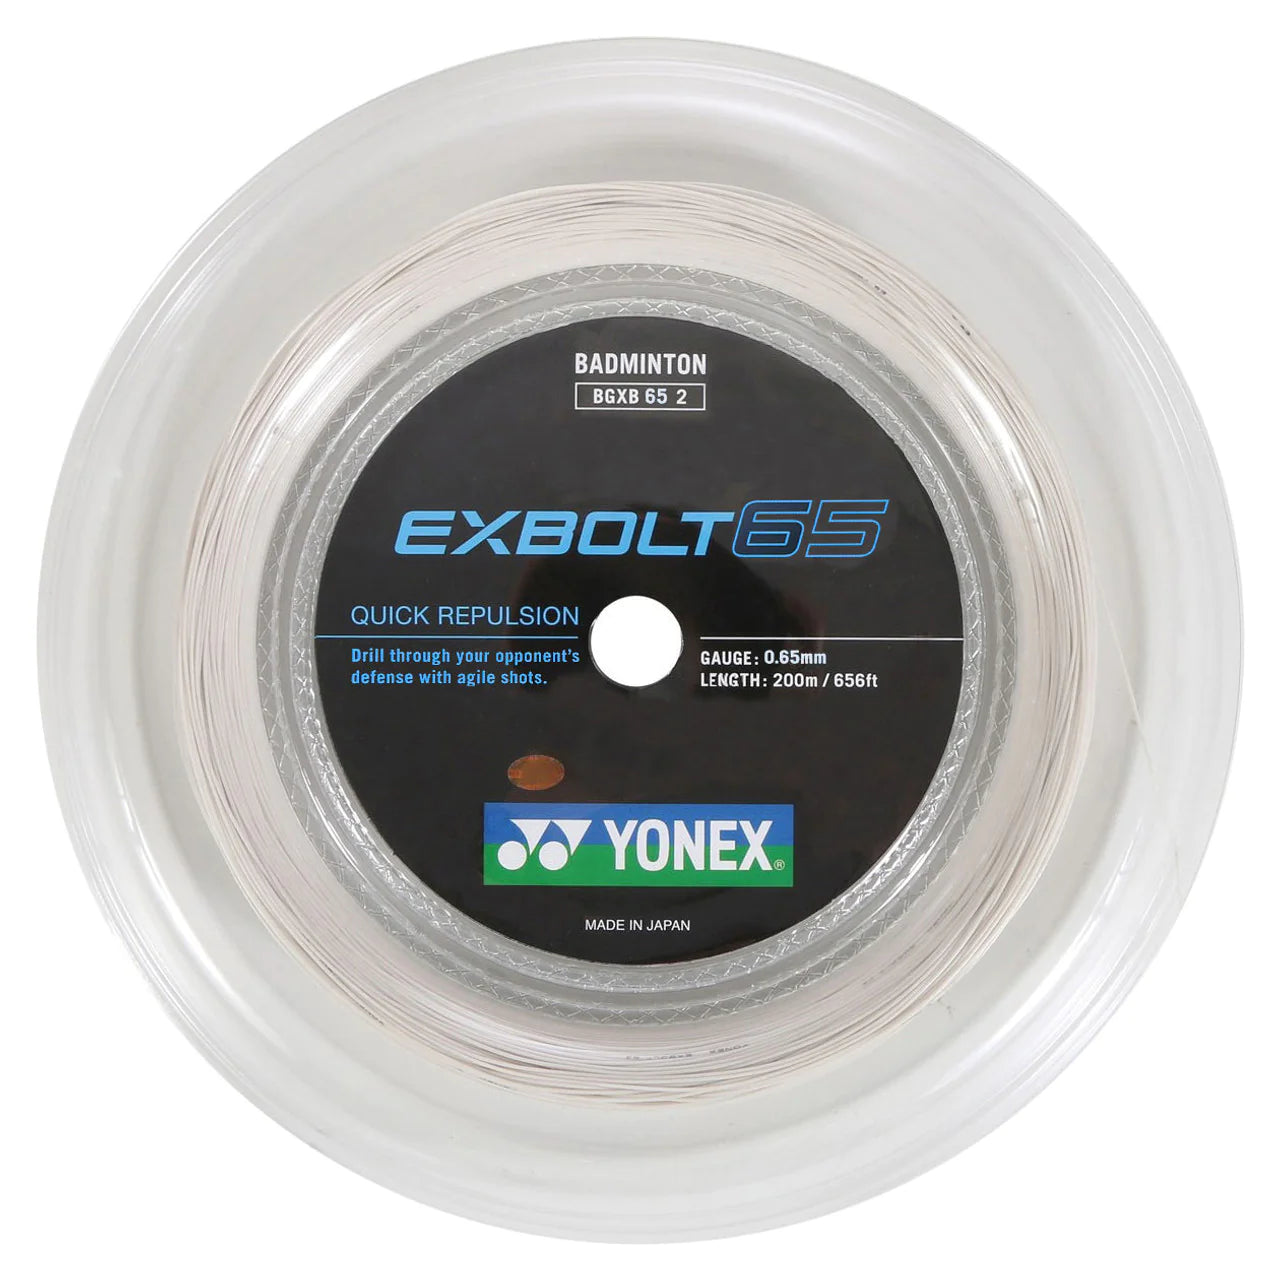 YONEX Badminton String EXBOLT65 200M Reel - Max Sports